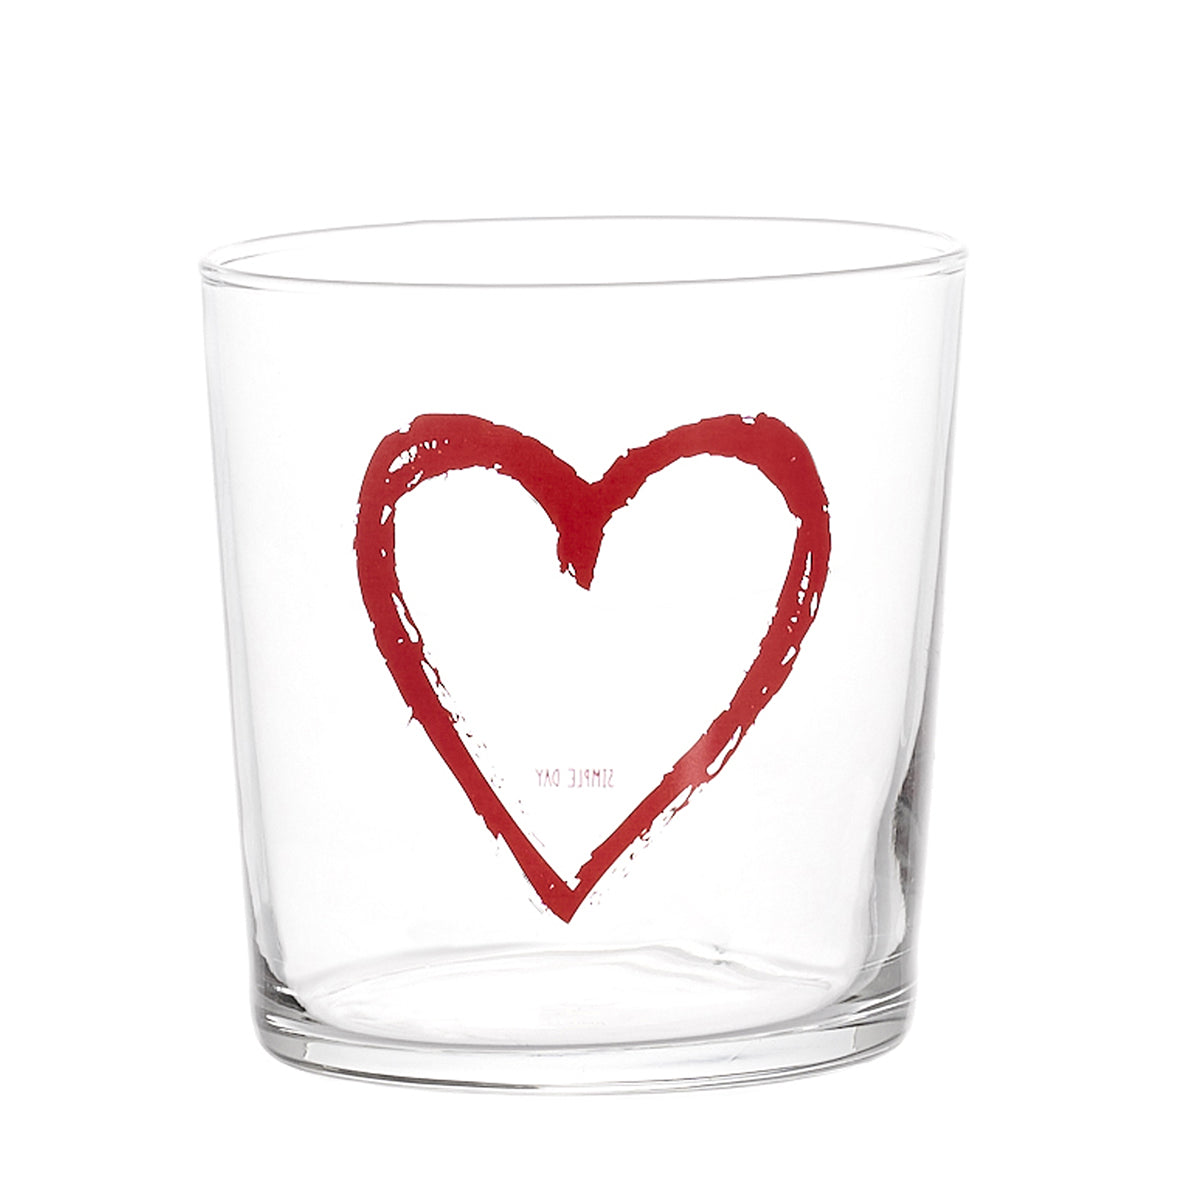 Set 6 Red Graffiti Heart Water Glasses